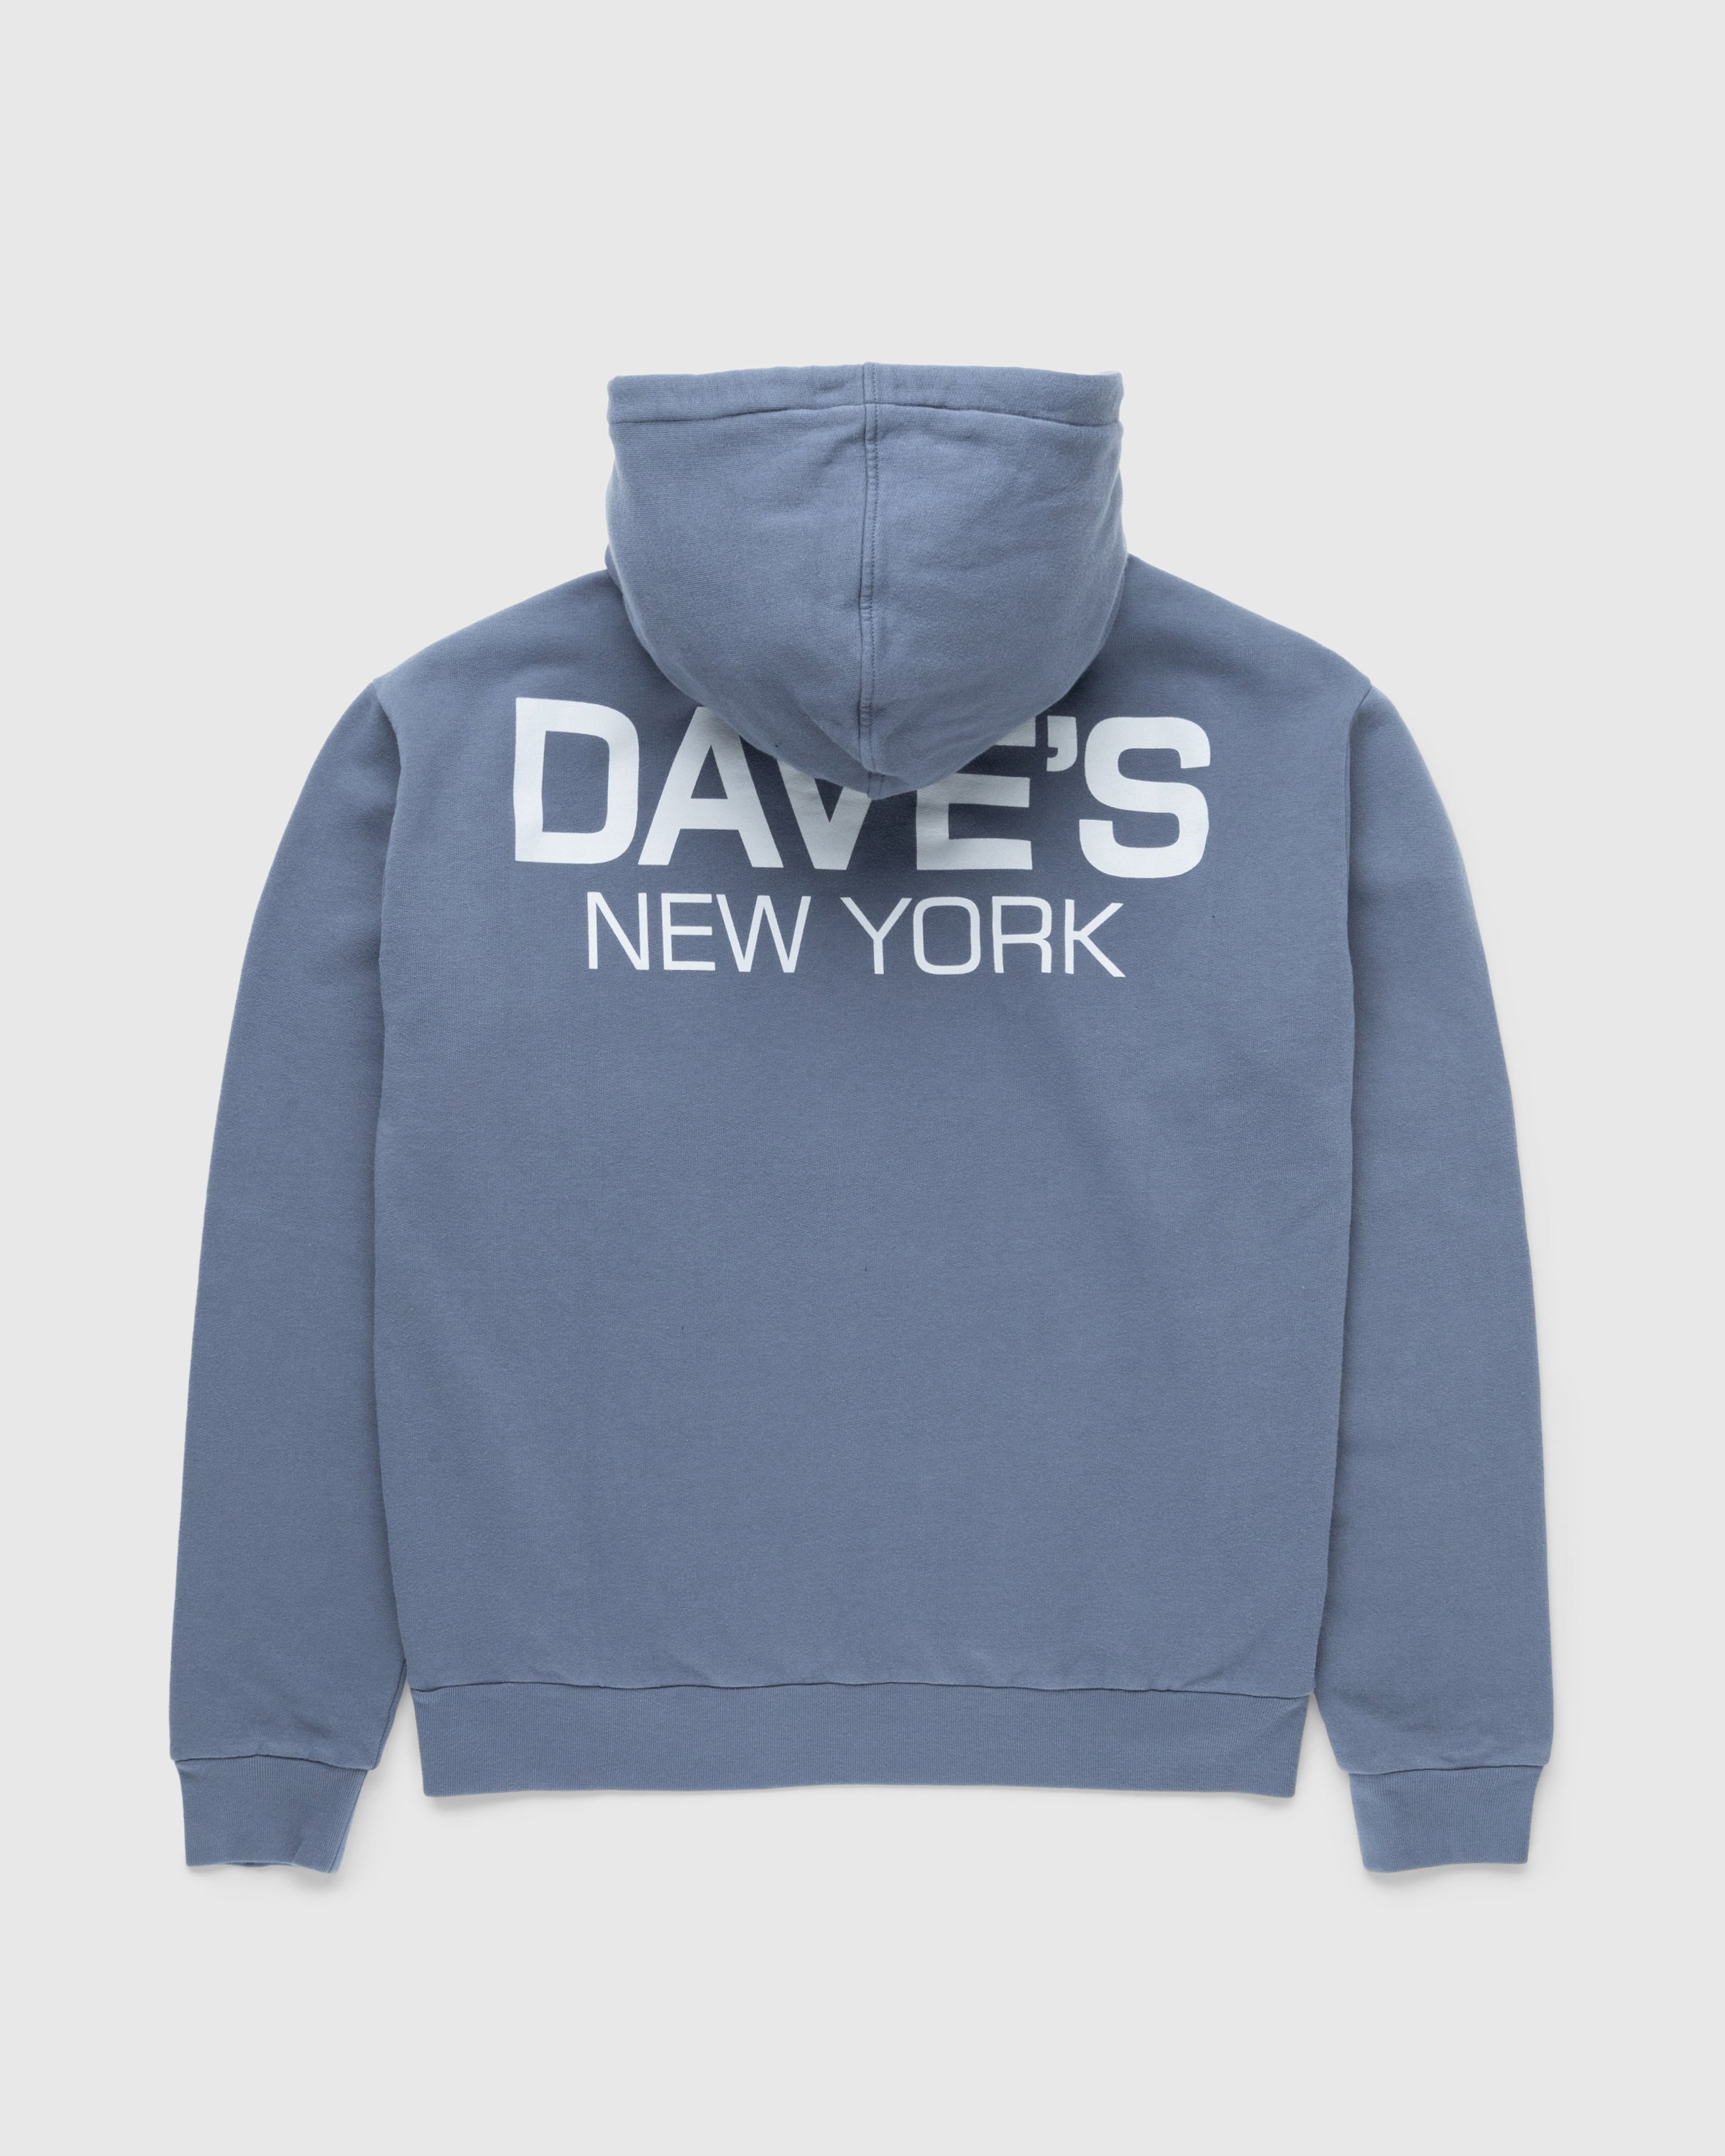 Dave's New York x Highsnobiety - Grey Hoodie - Clothing - Grey - Image 1